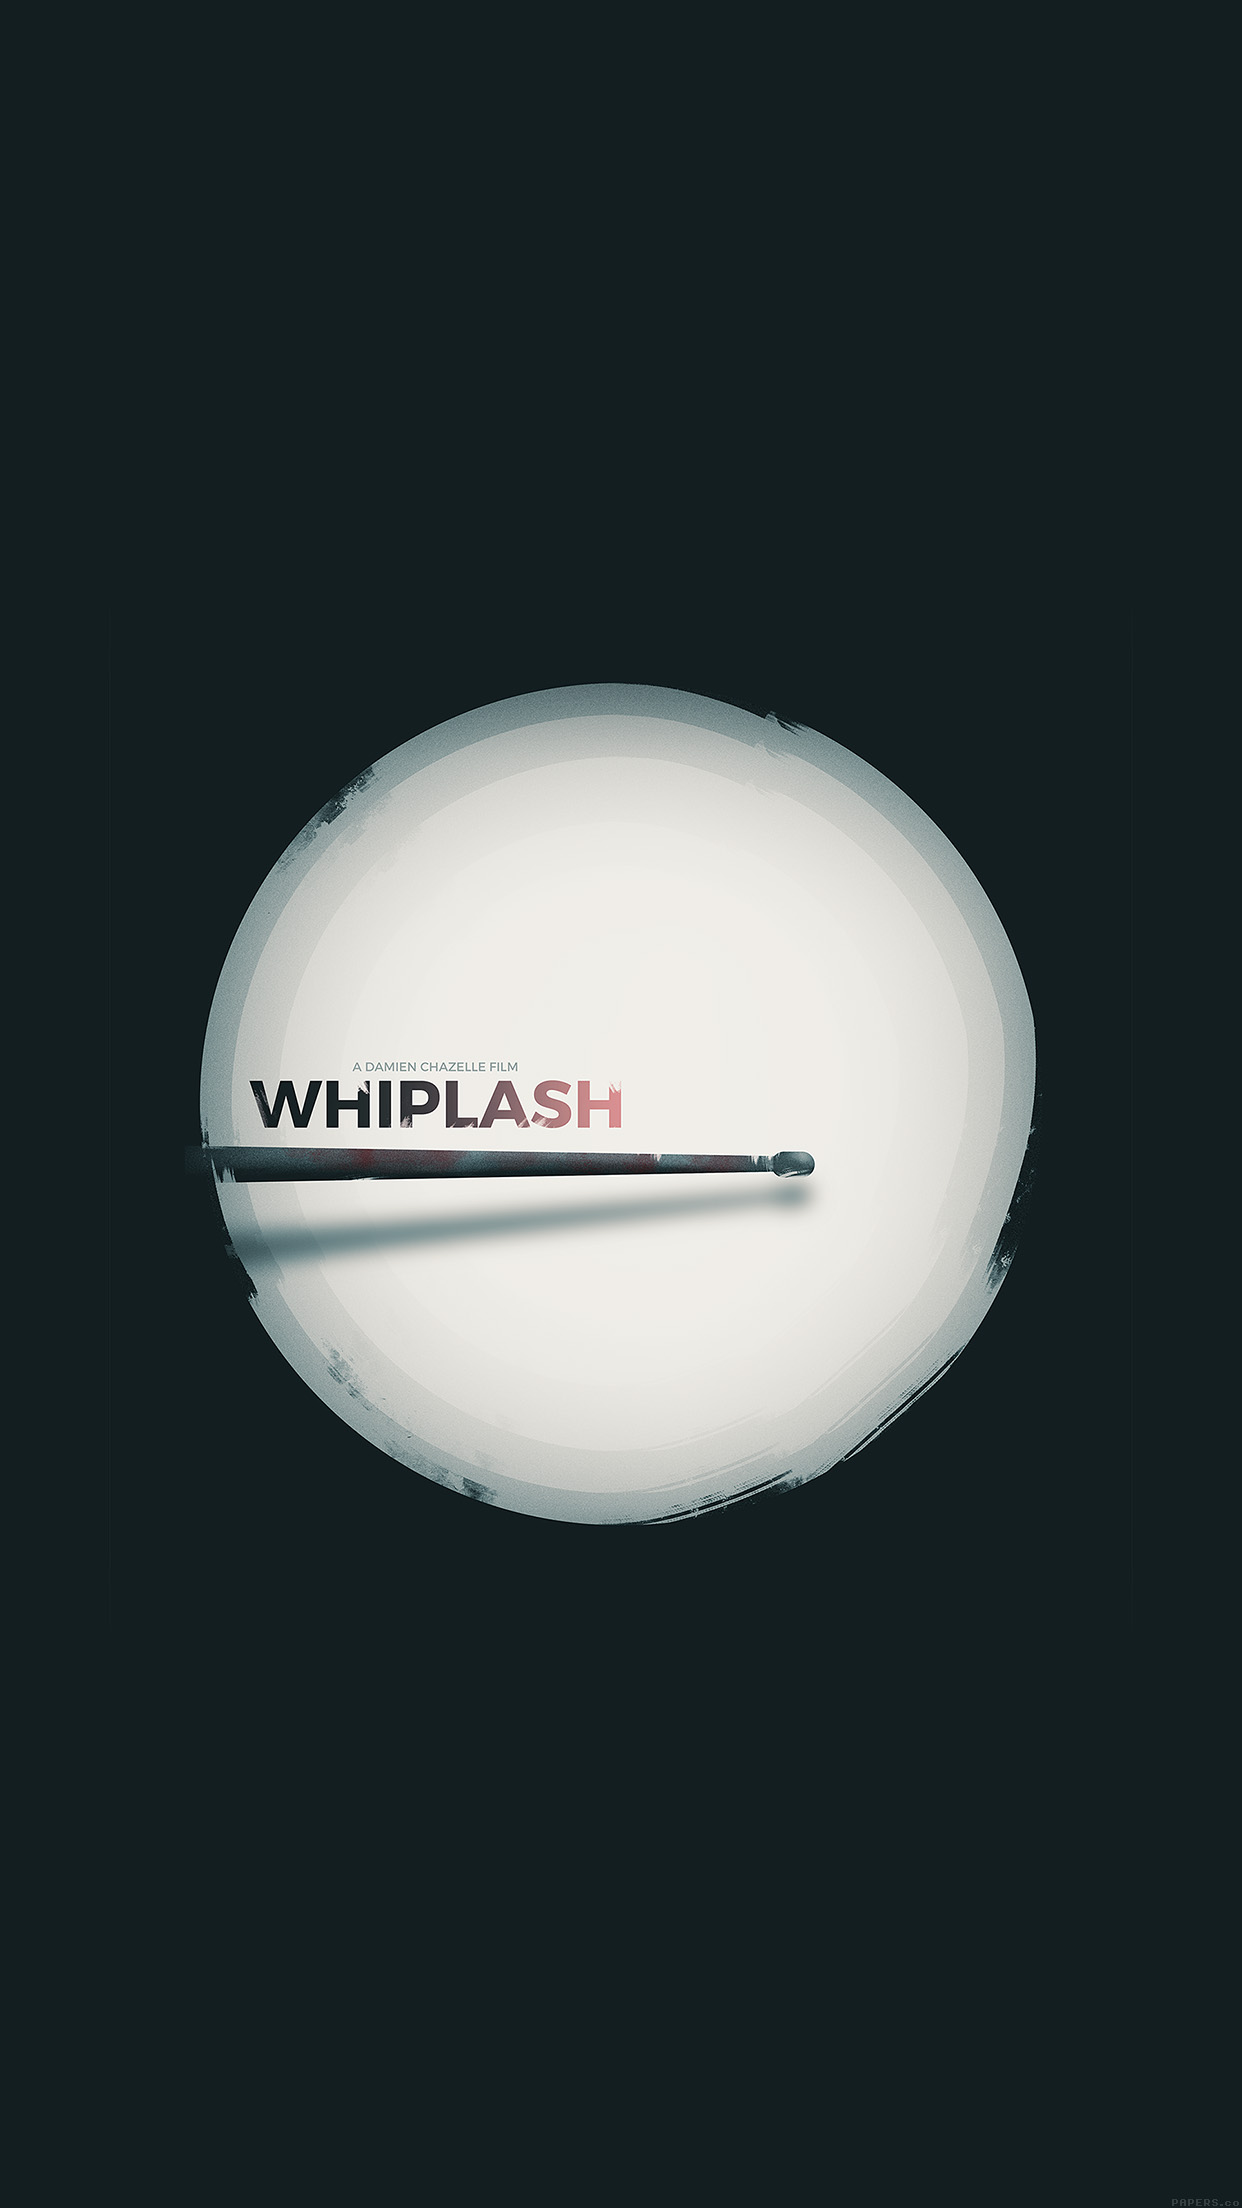 Minimal Whiplash Poster Film Music Drum Android wallpaper